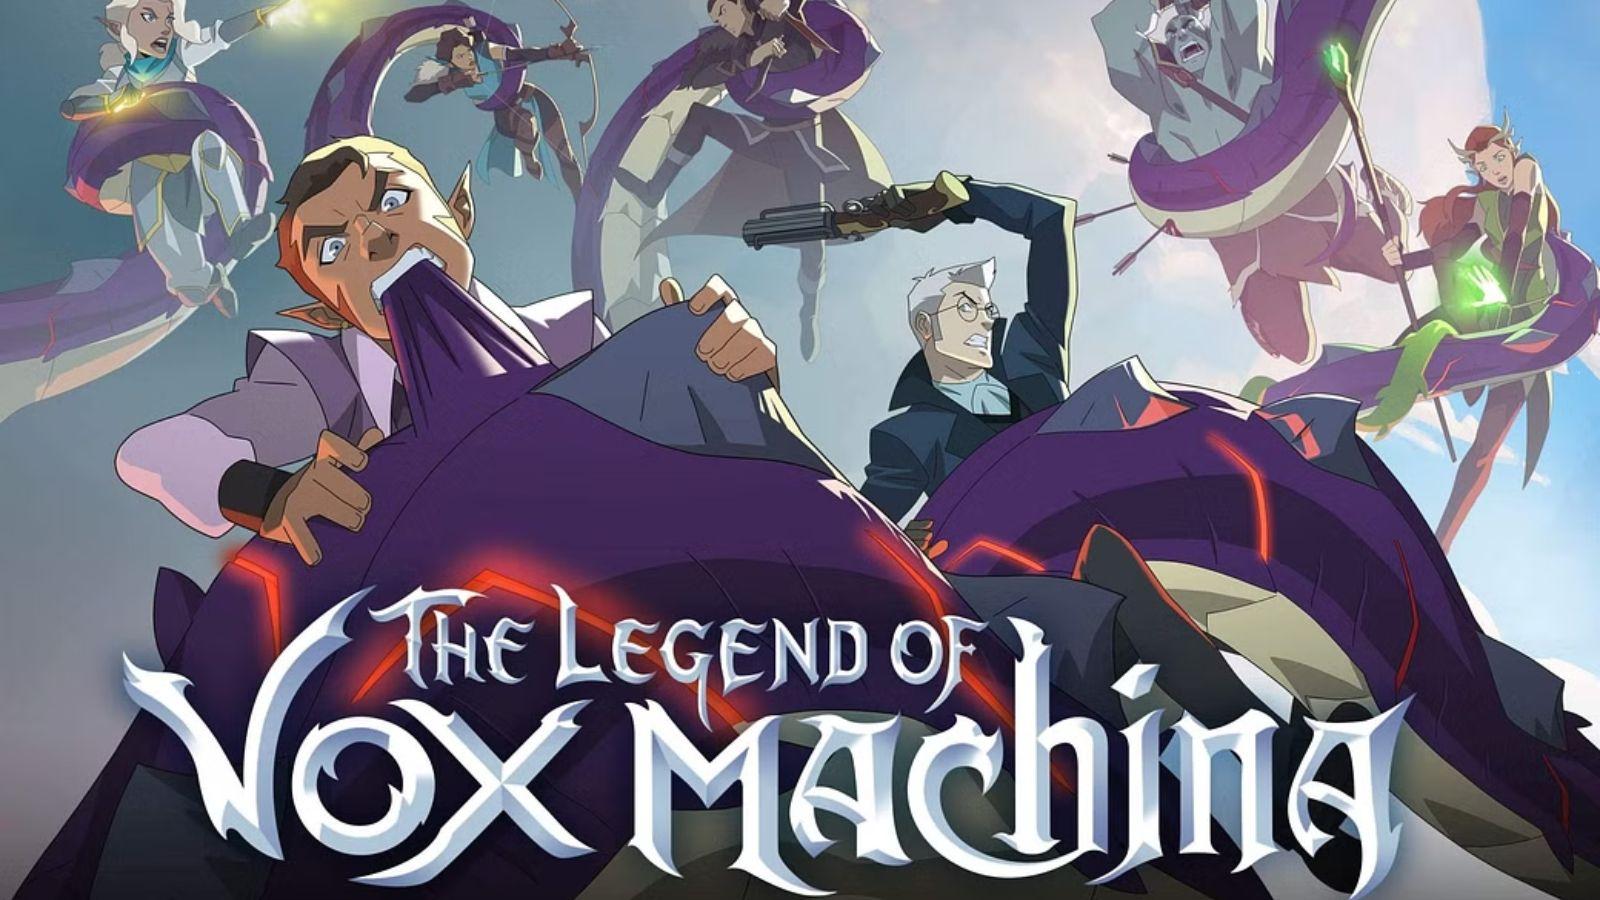 The Legend of Vox Machina season 2